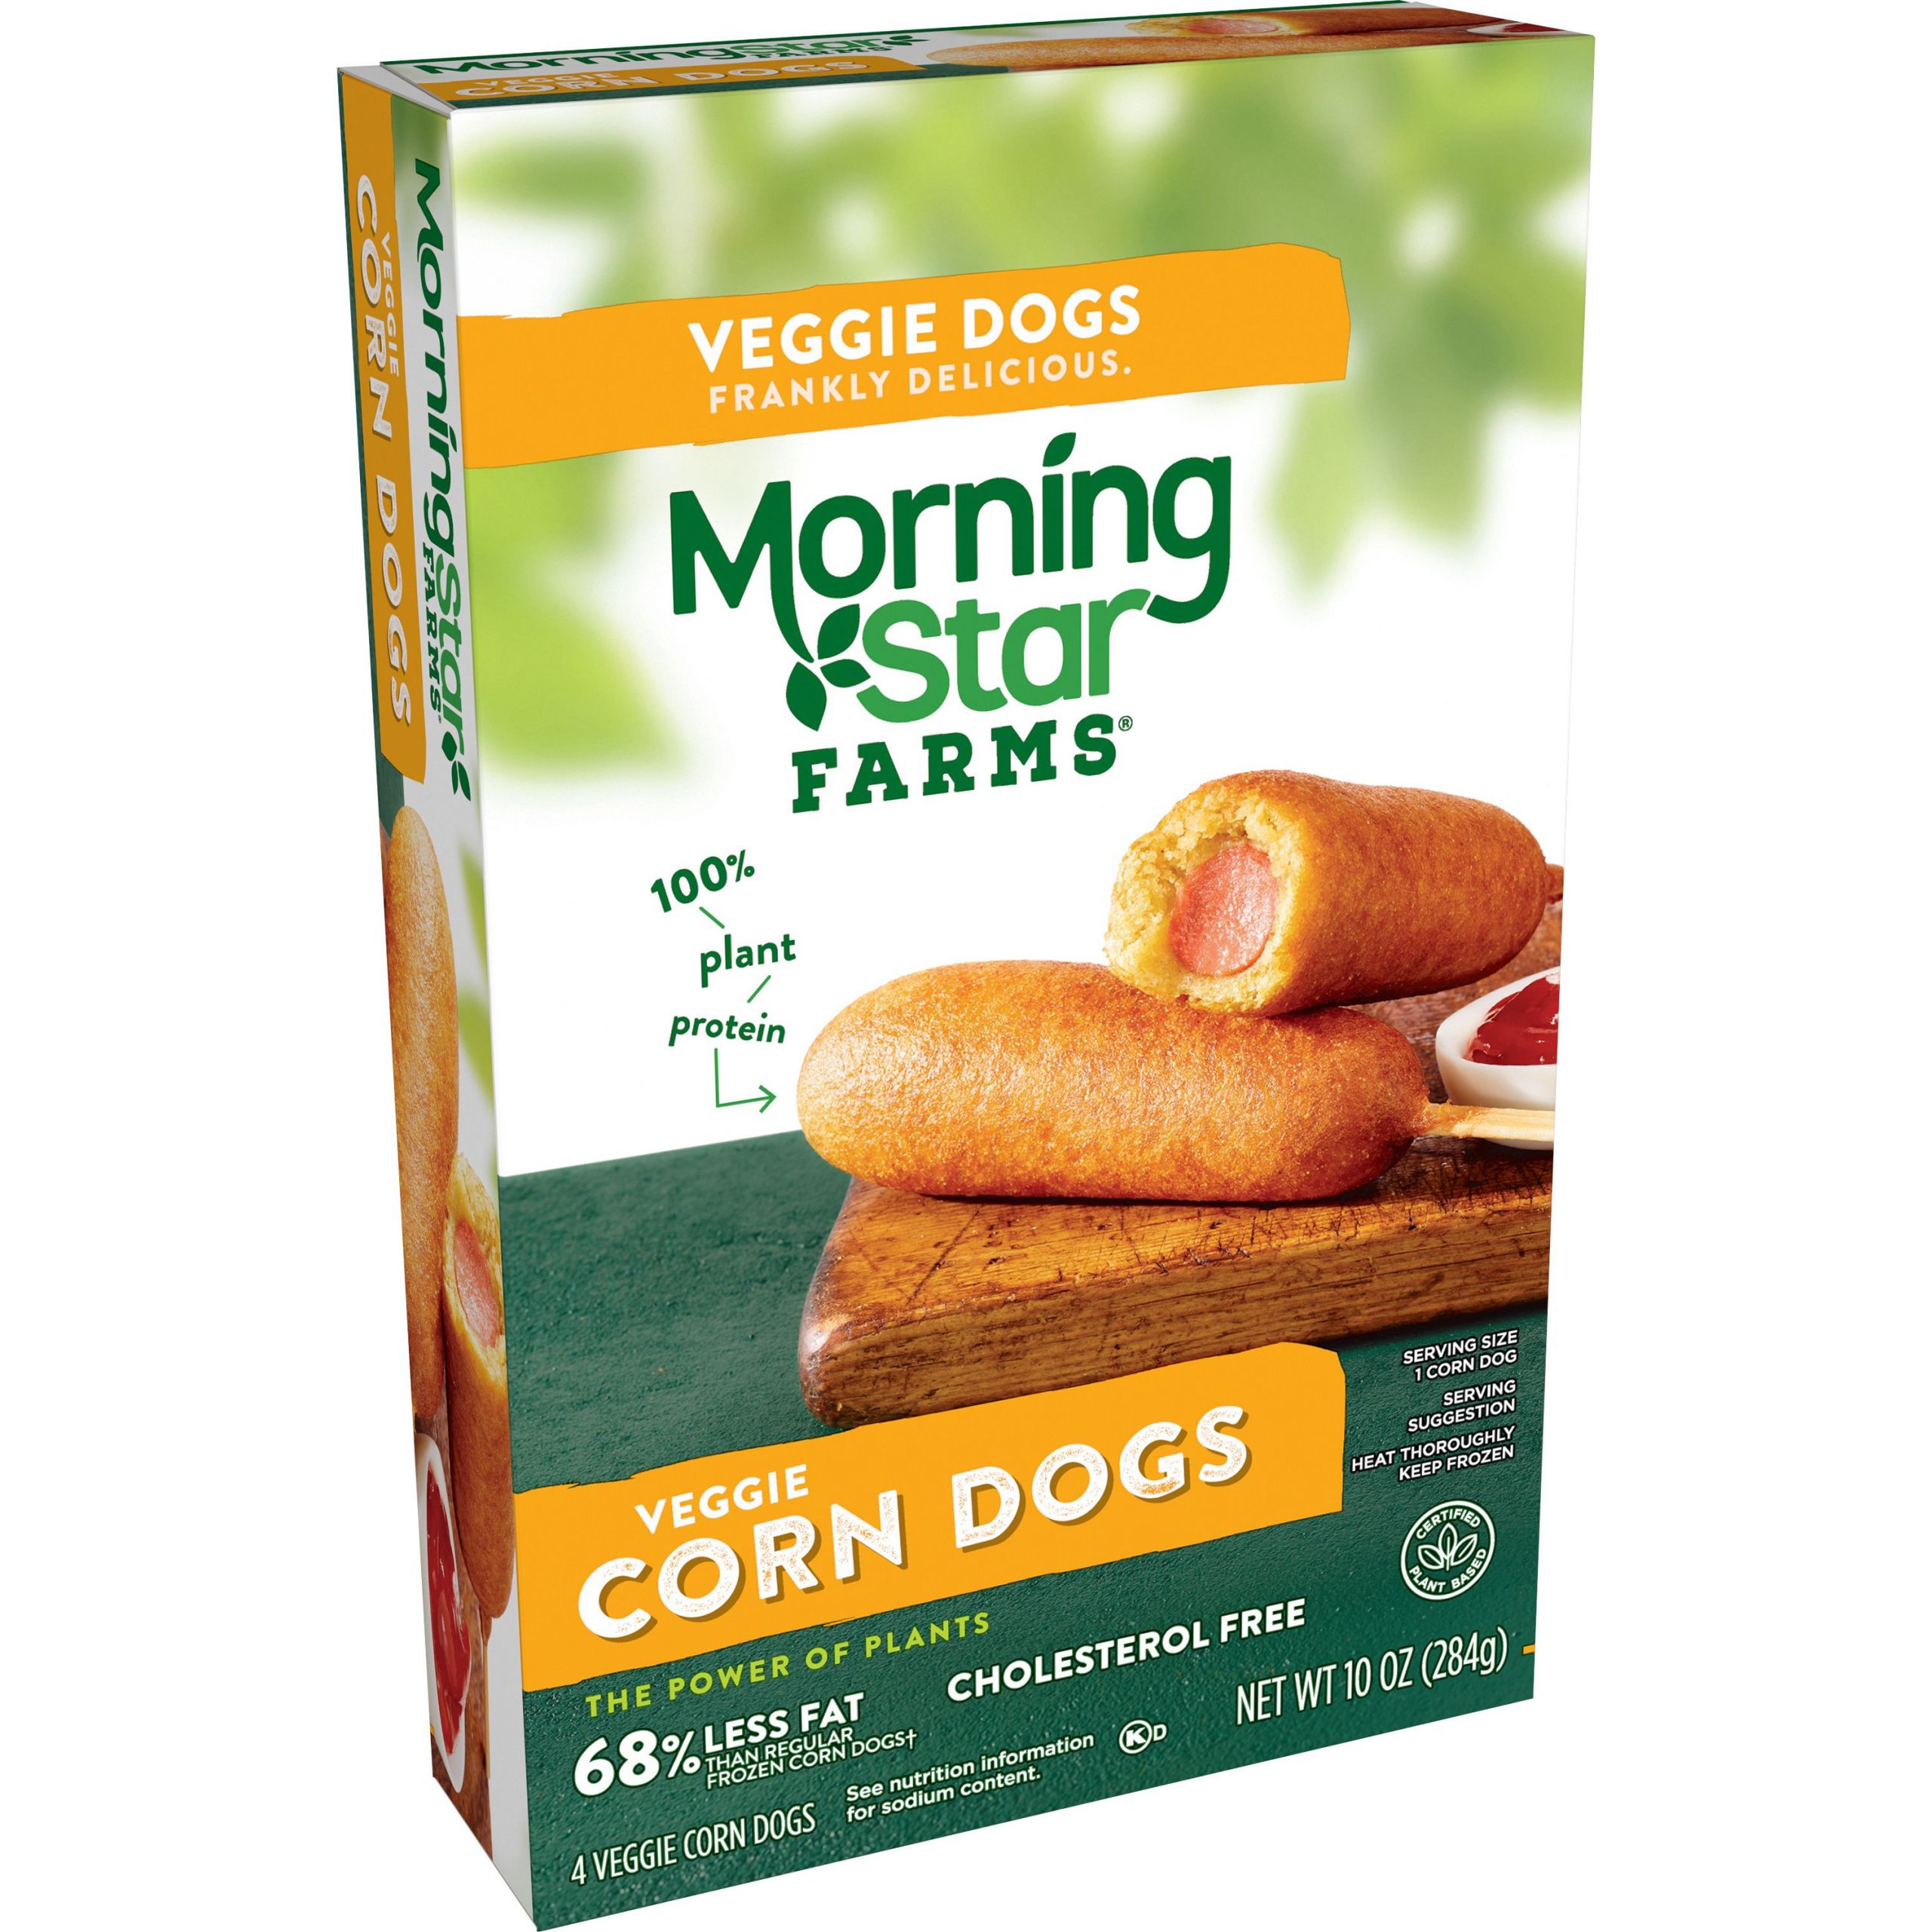 Vegan Corn Dogs Unique Morningstar Farms Veggie Corn Dogs original Vegan 10oz